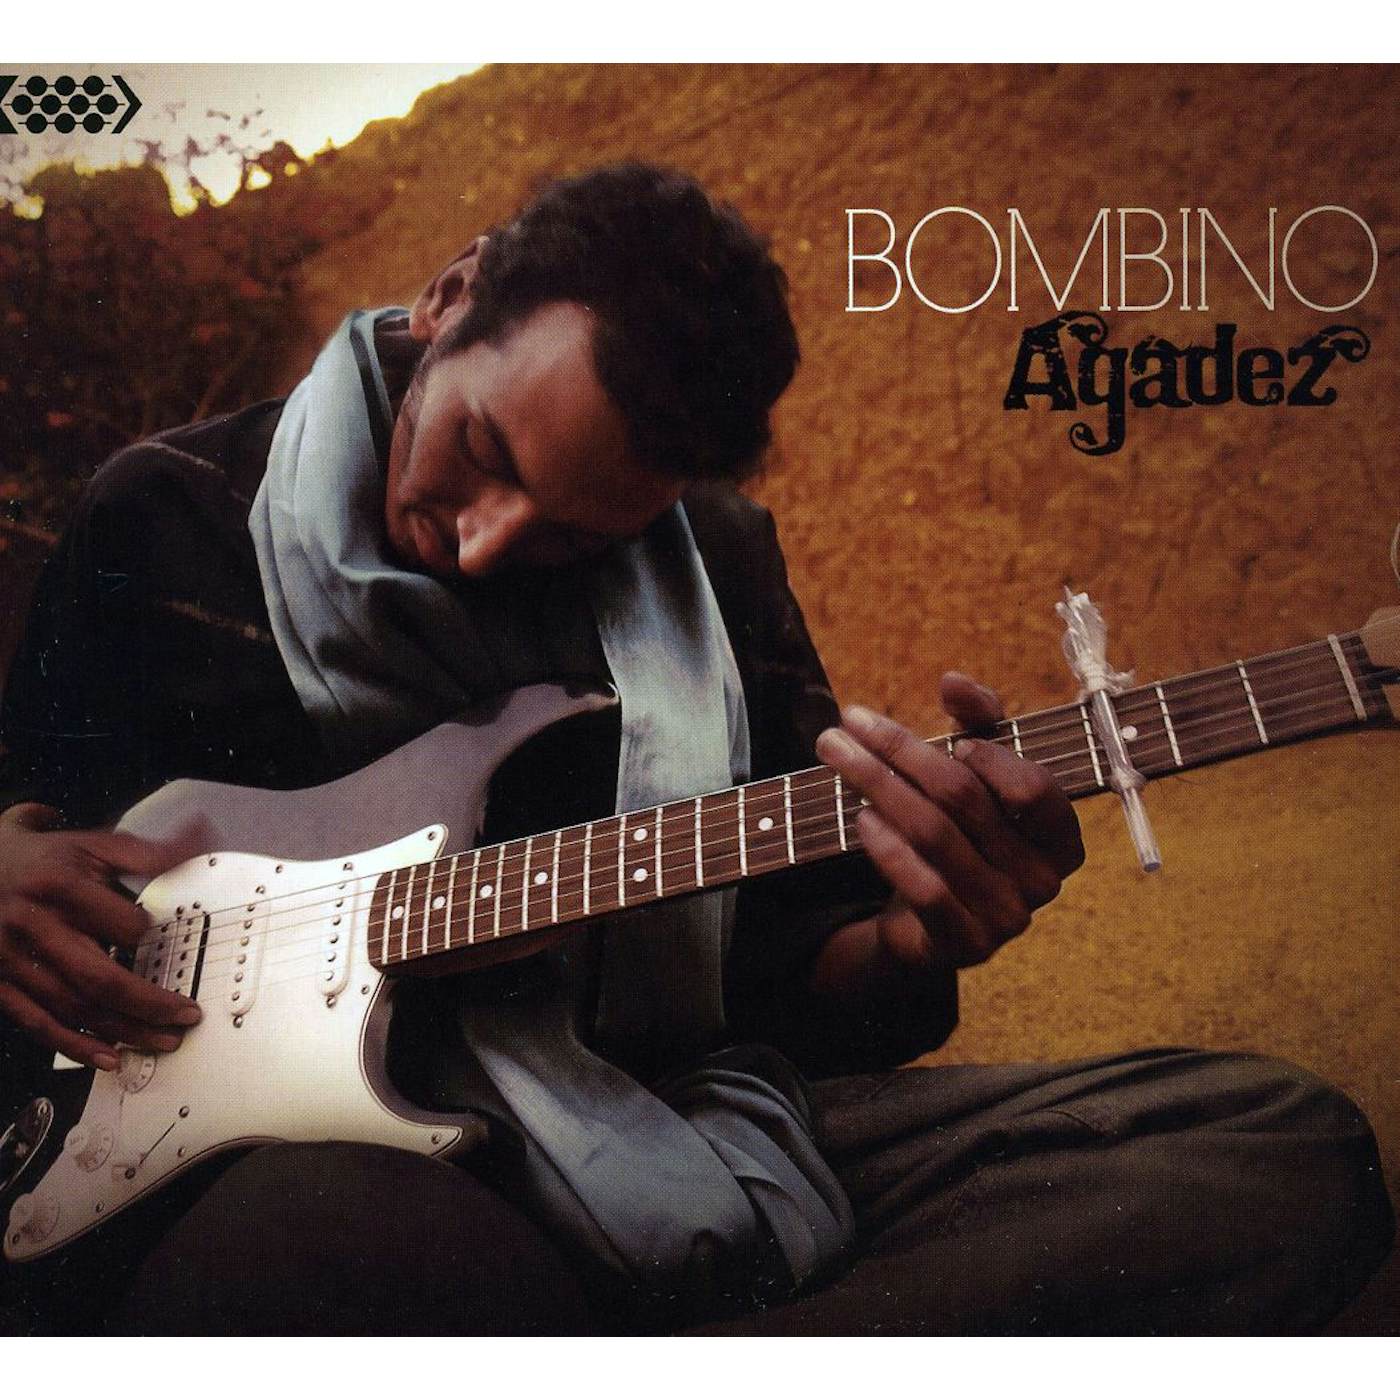 Bombino AGADEZ CD